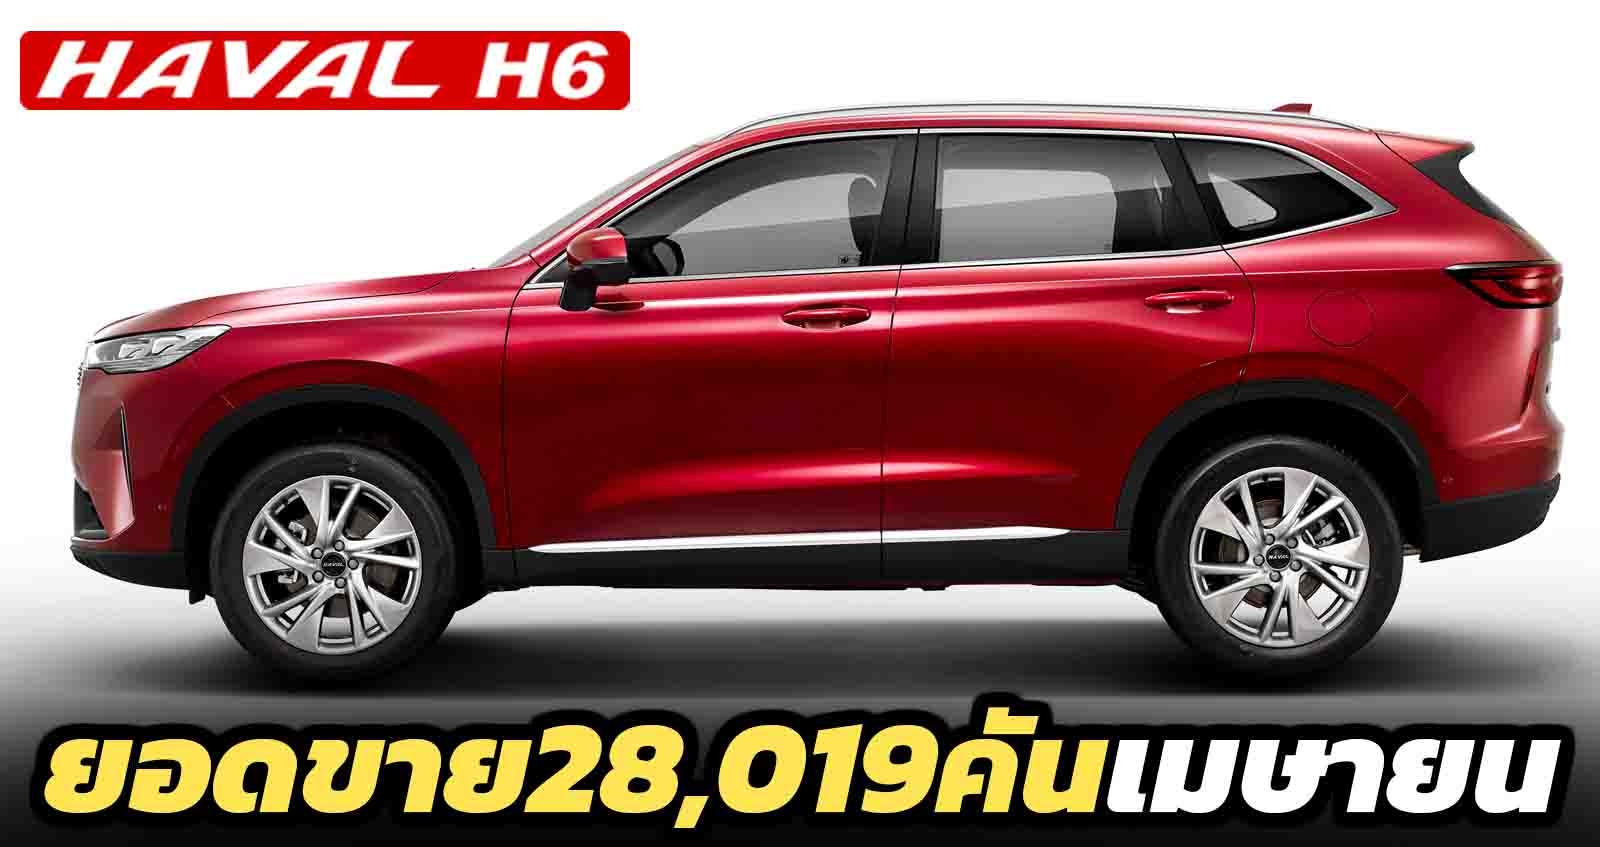 HAVAL H6 ยอดขาย 28,019 คัน เมษายน 2021 ในจีน อันดับ1 SUV ติดต่อกัน 95 เดือน